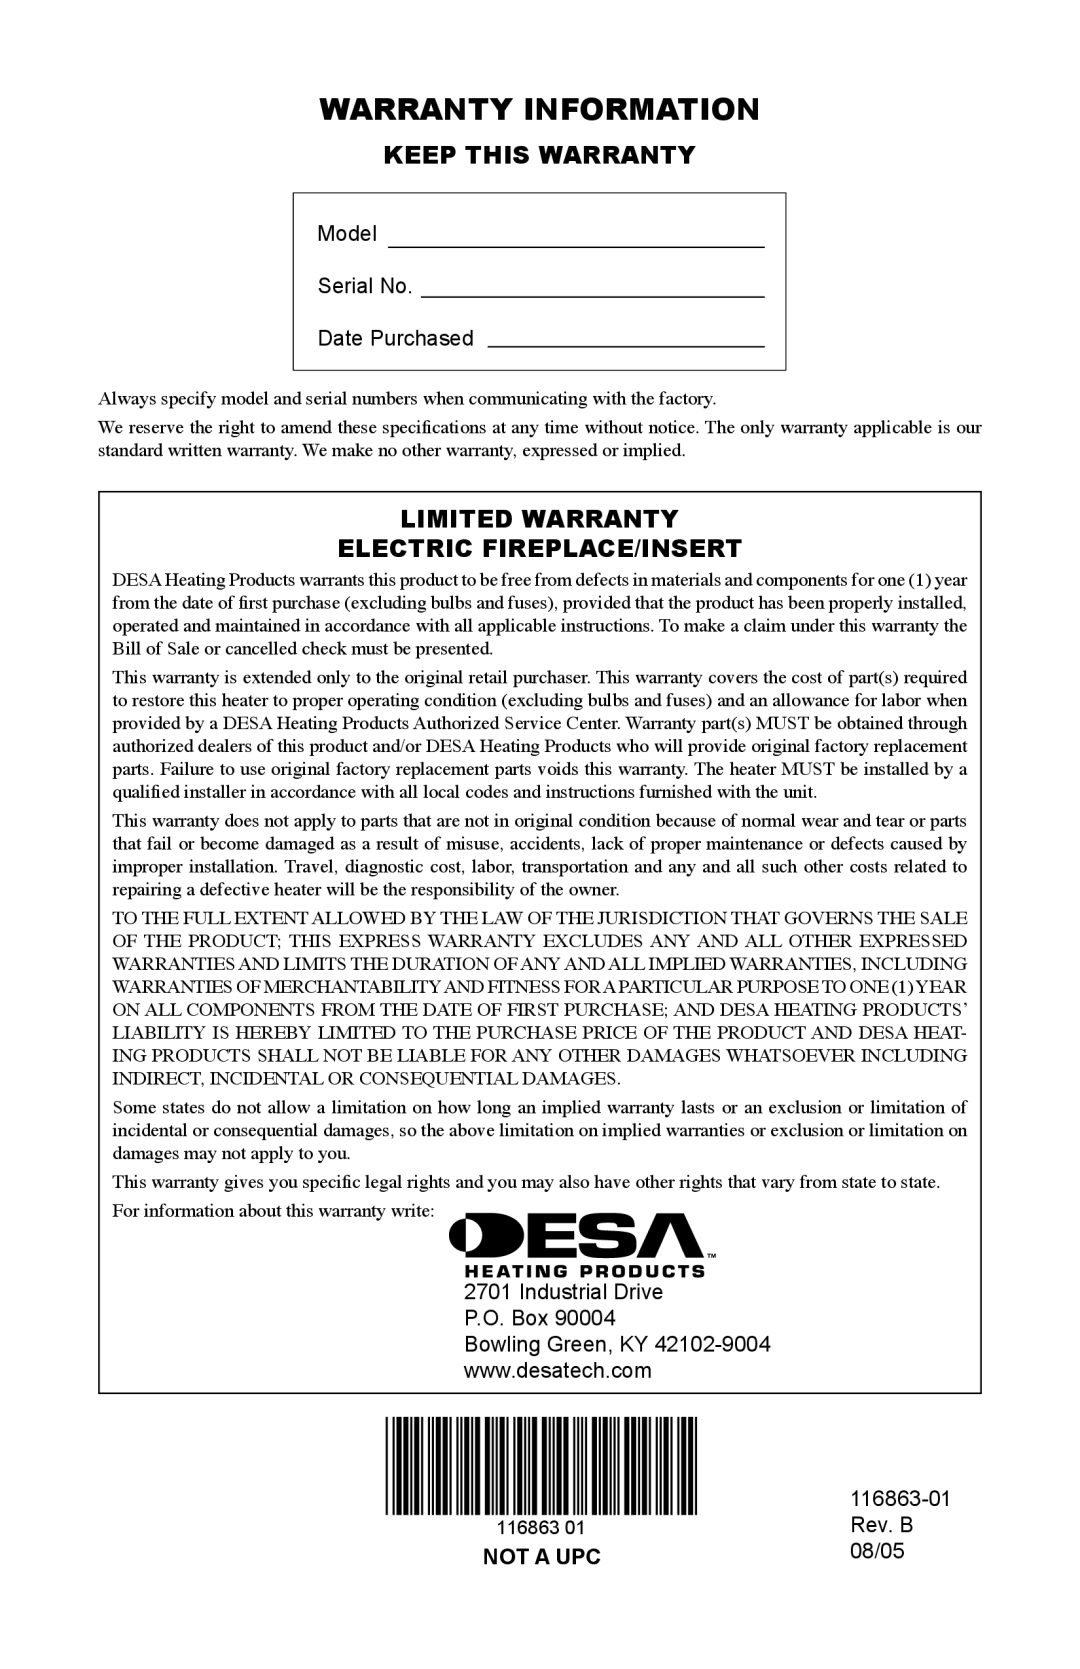 Desa CEF26BN Warranty Information, Keep This Warranty, Limited Warranty Electric Fireplace/Insert, Rev. B, Not A Upc 